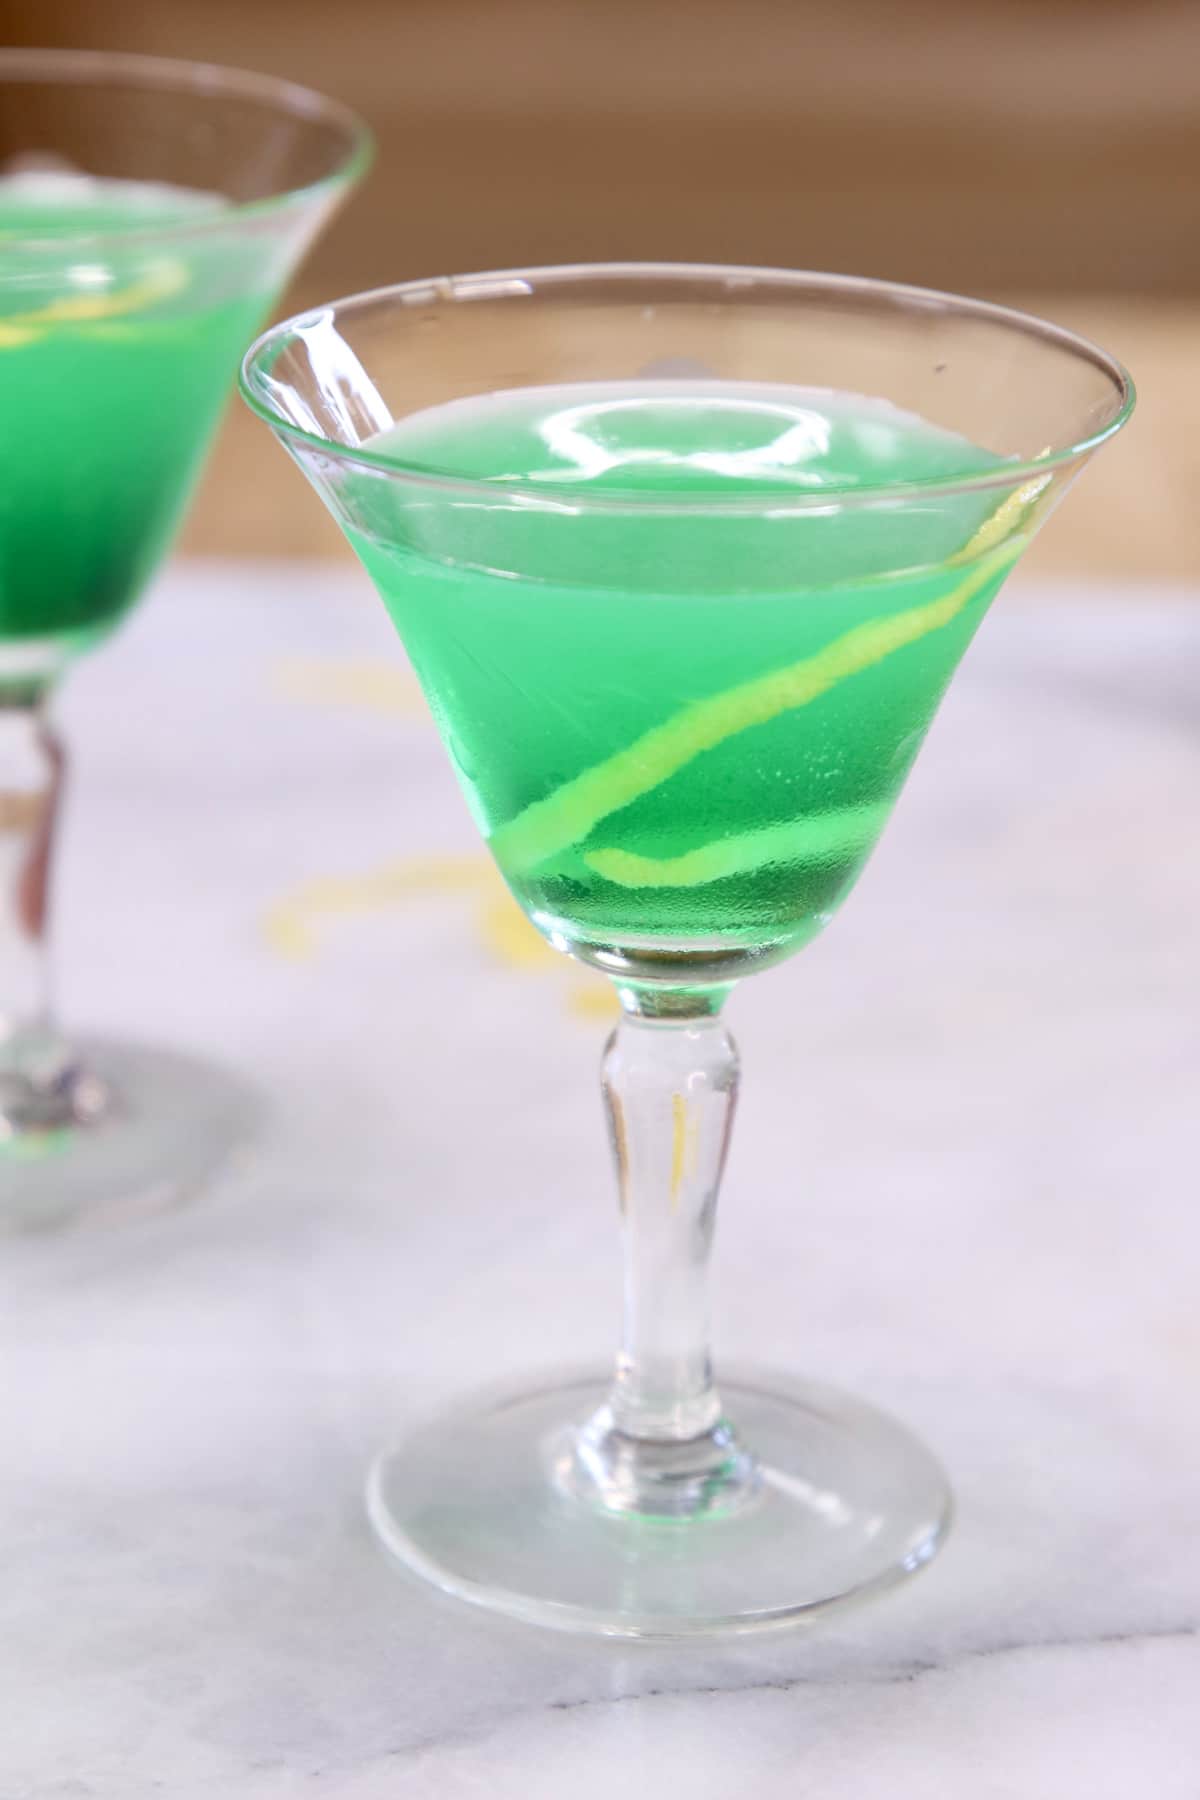 Irish Martini cocktail with lemon garnish.